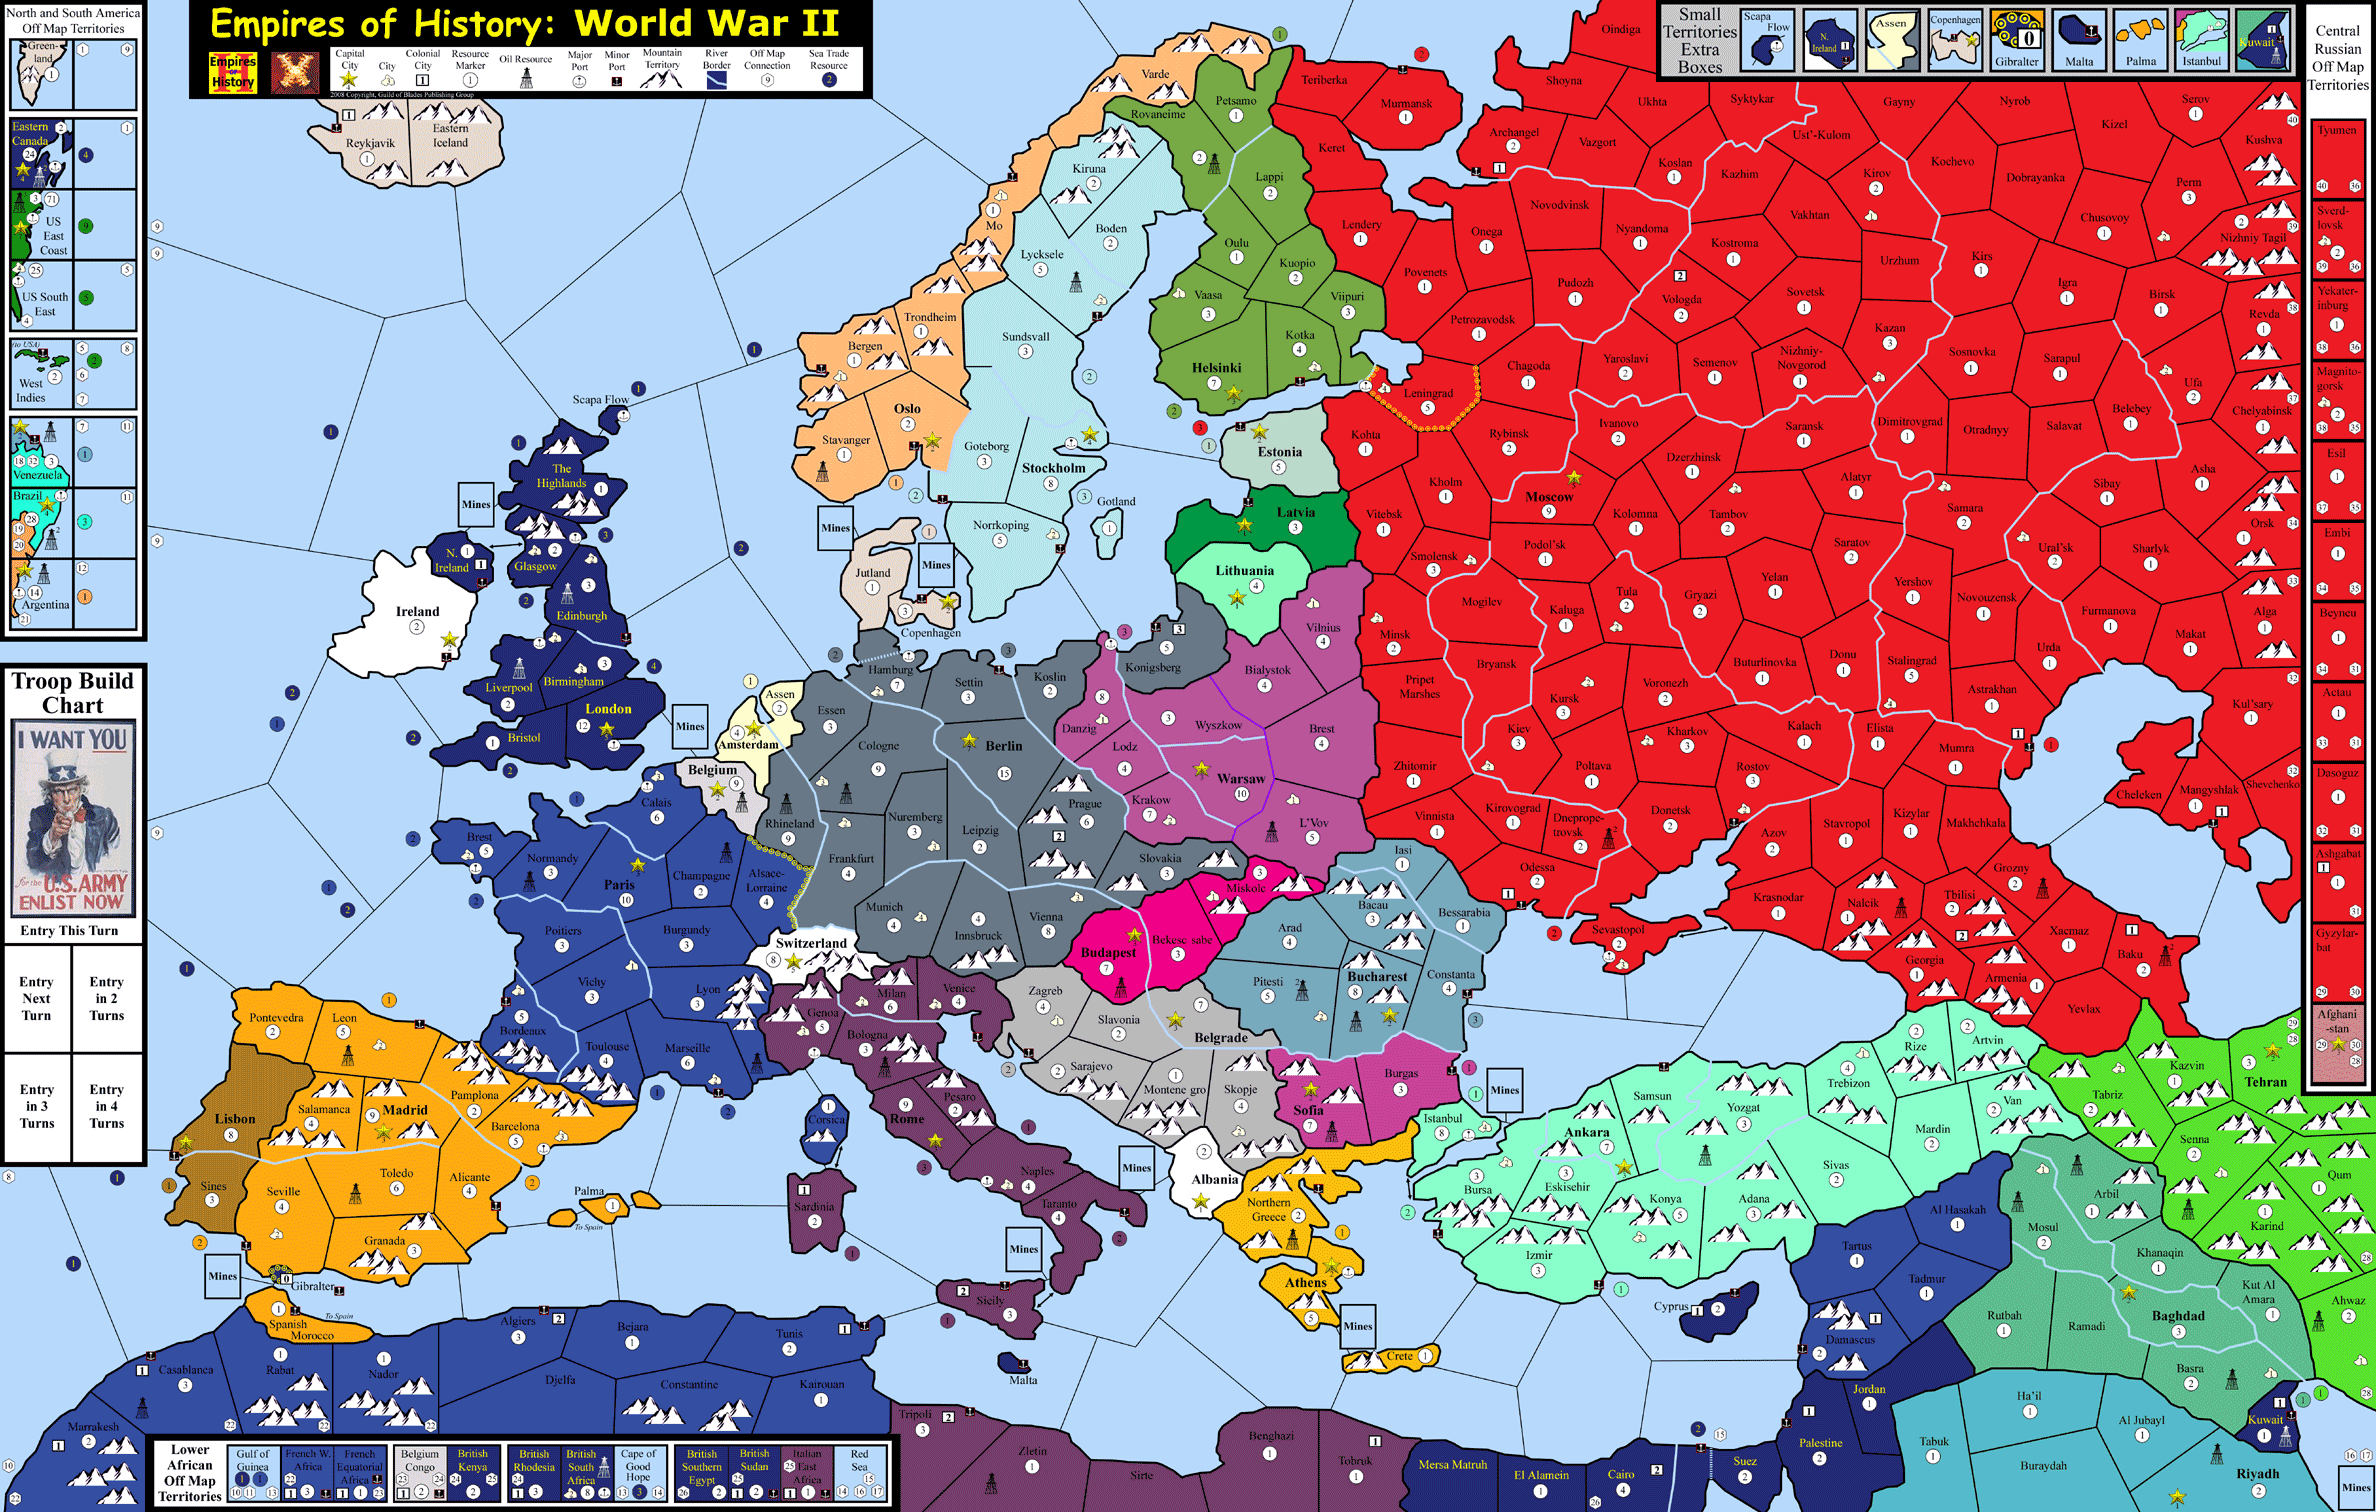 free downloads European War 5: Empire